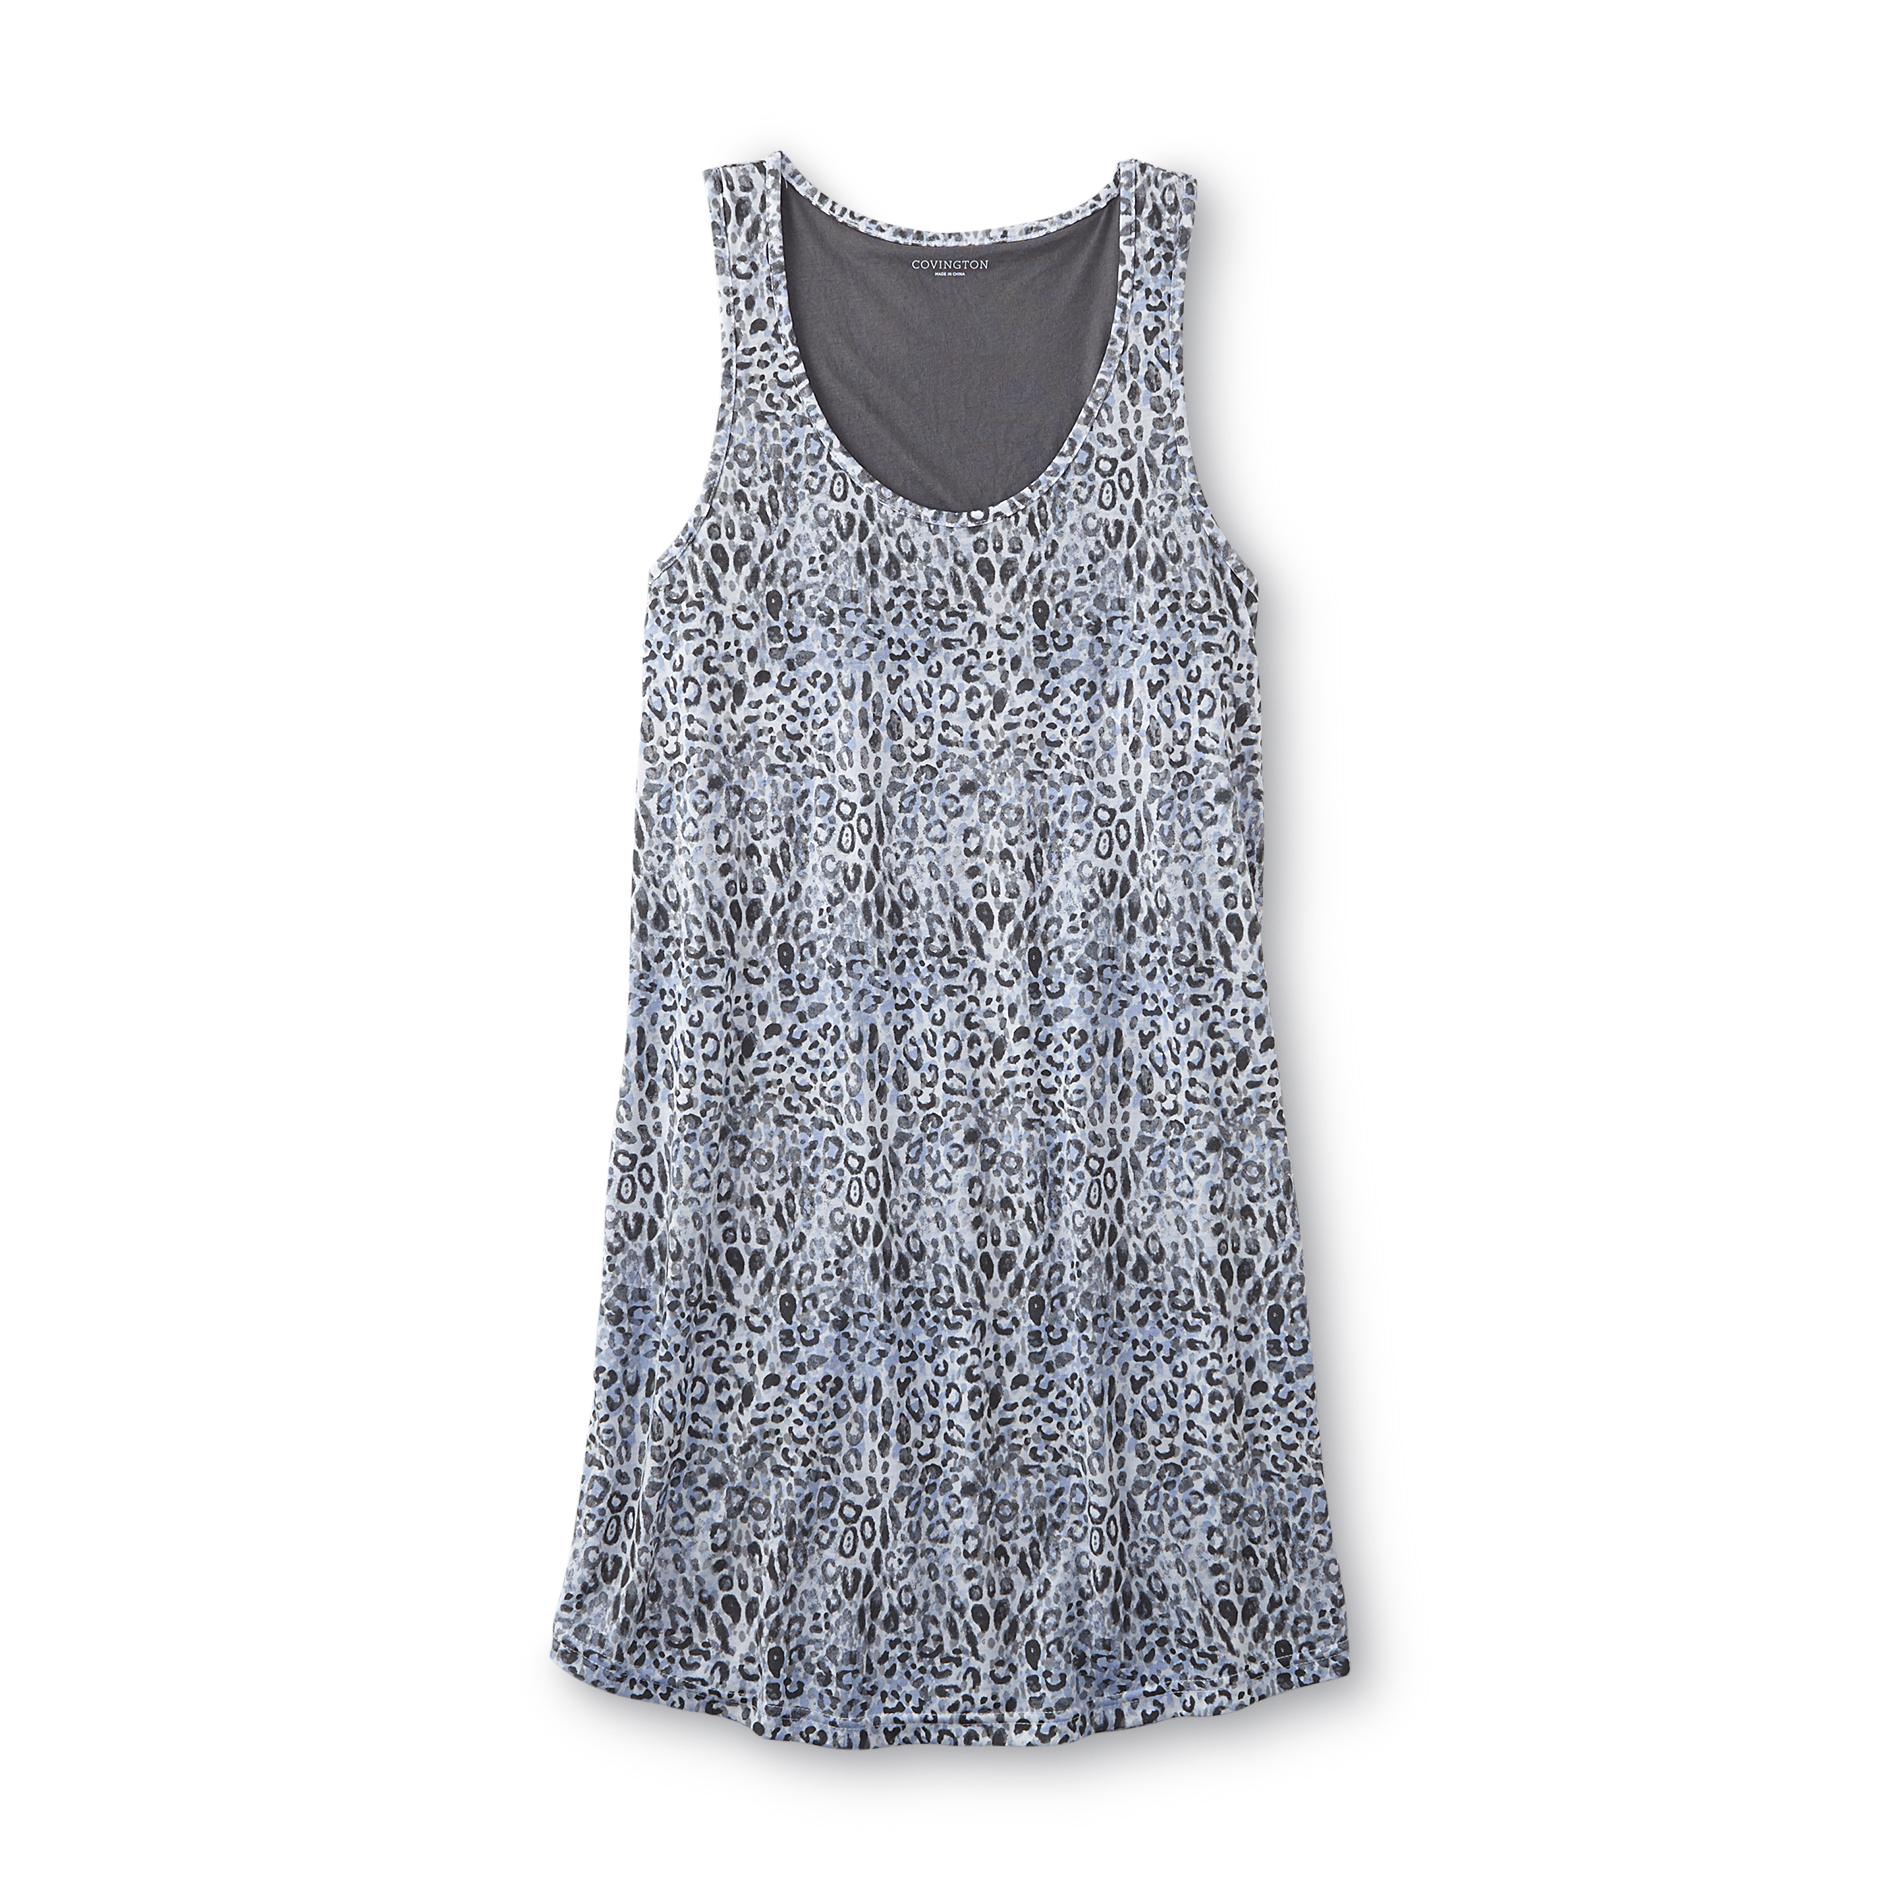 Covington Women's Sleeveless Sleep Shirt - Leopard Print